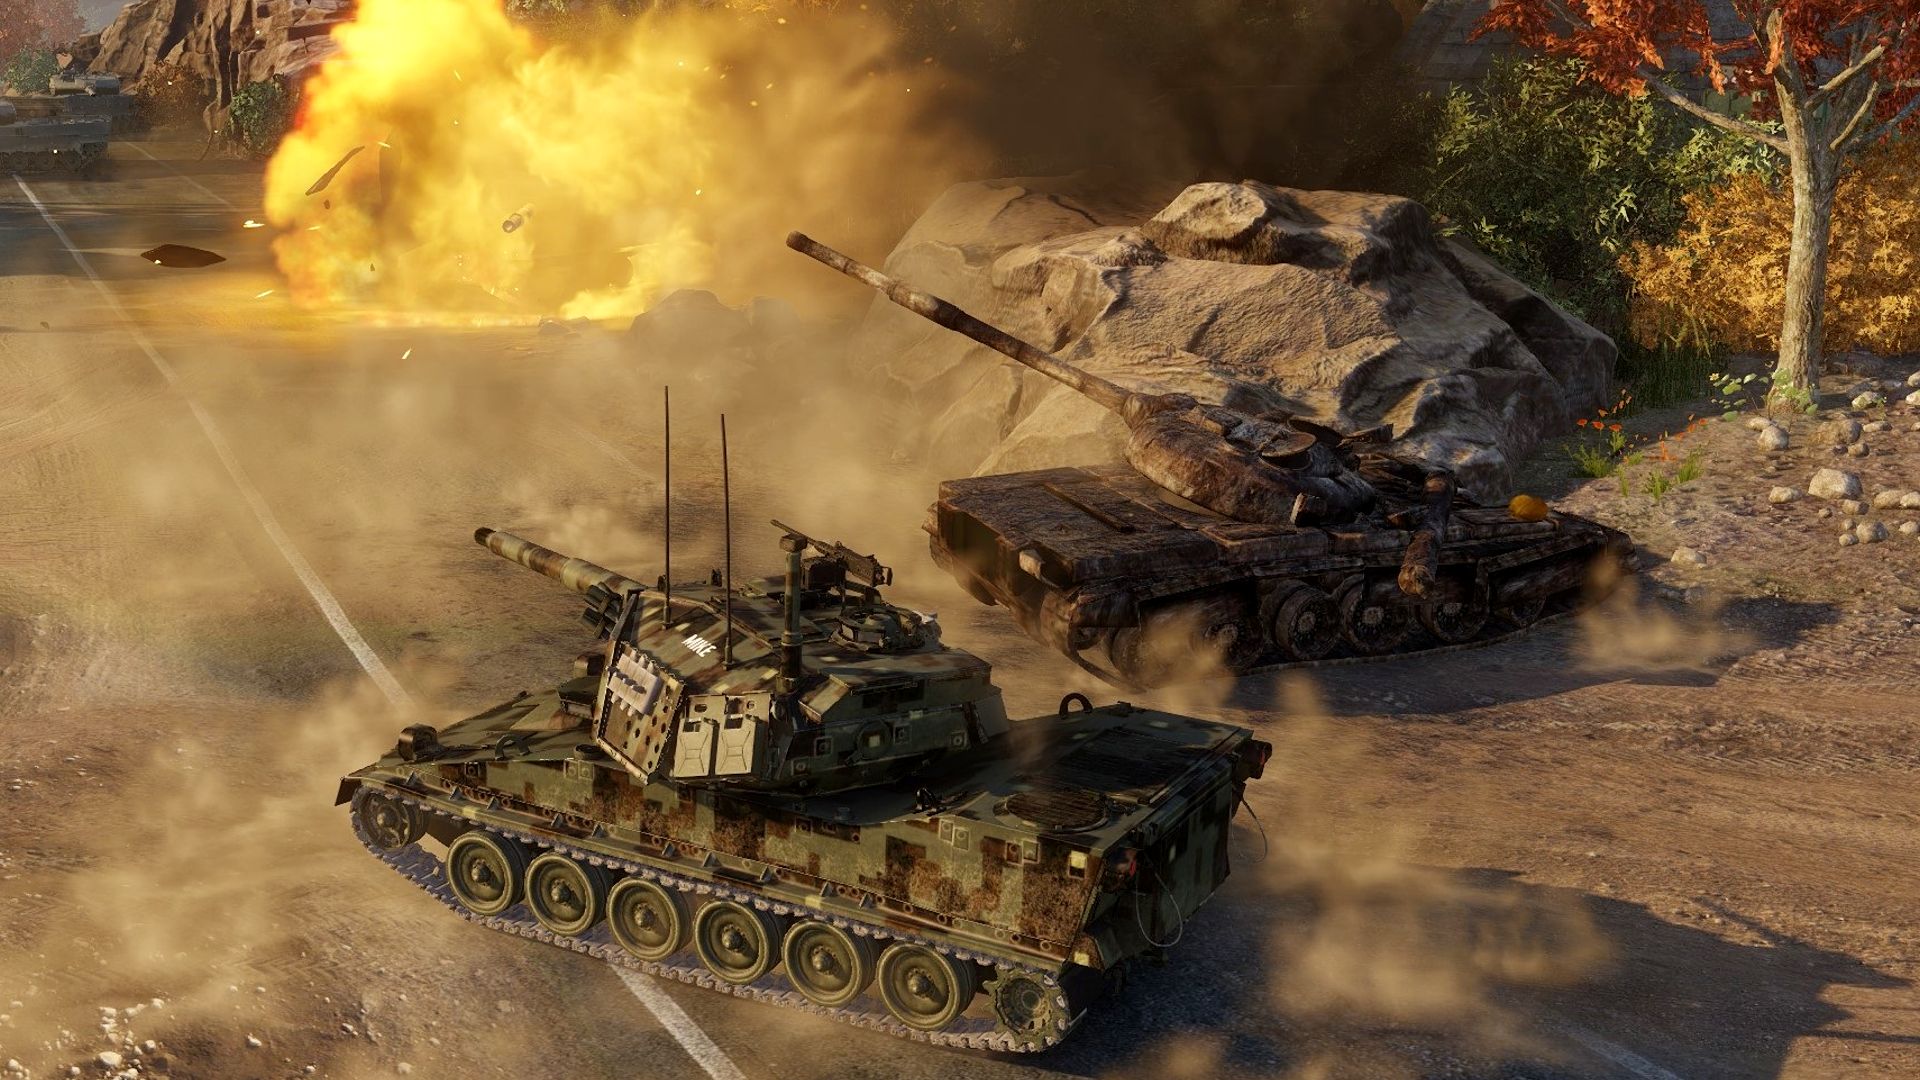 battle tanks game